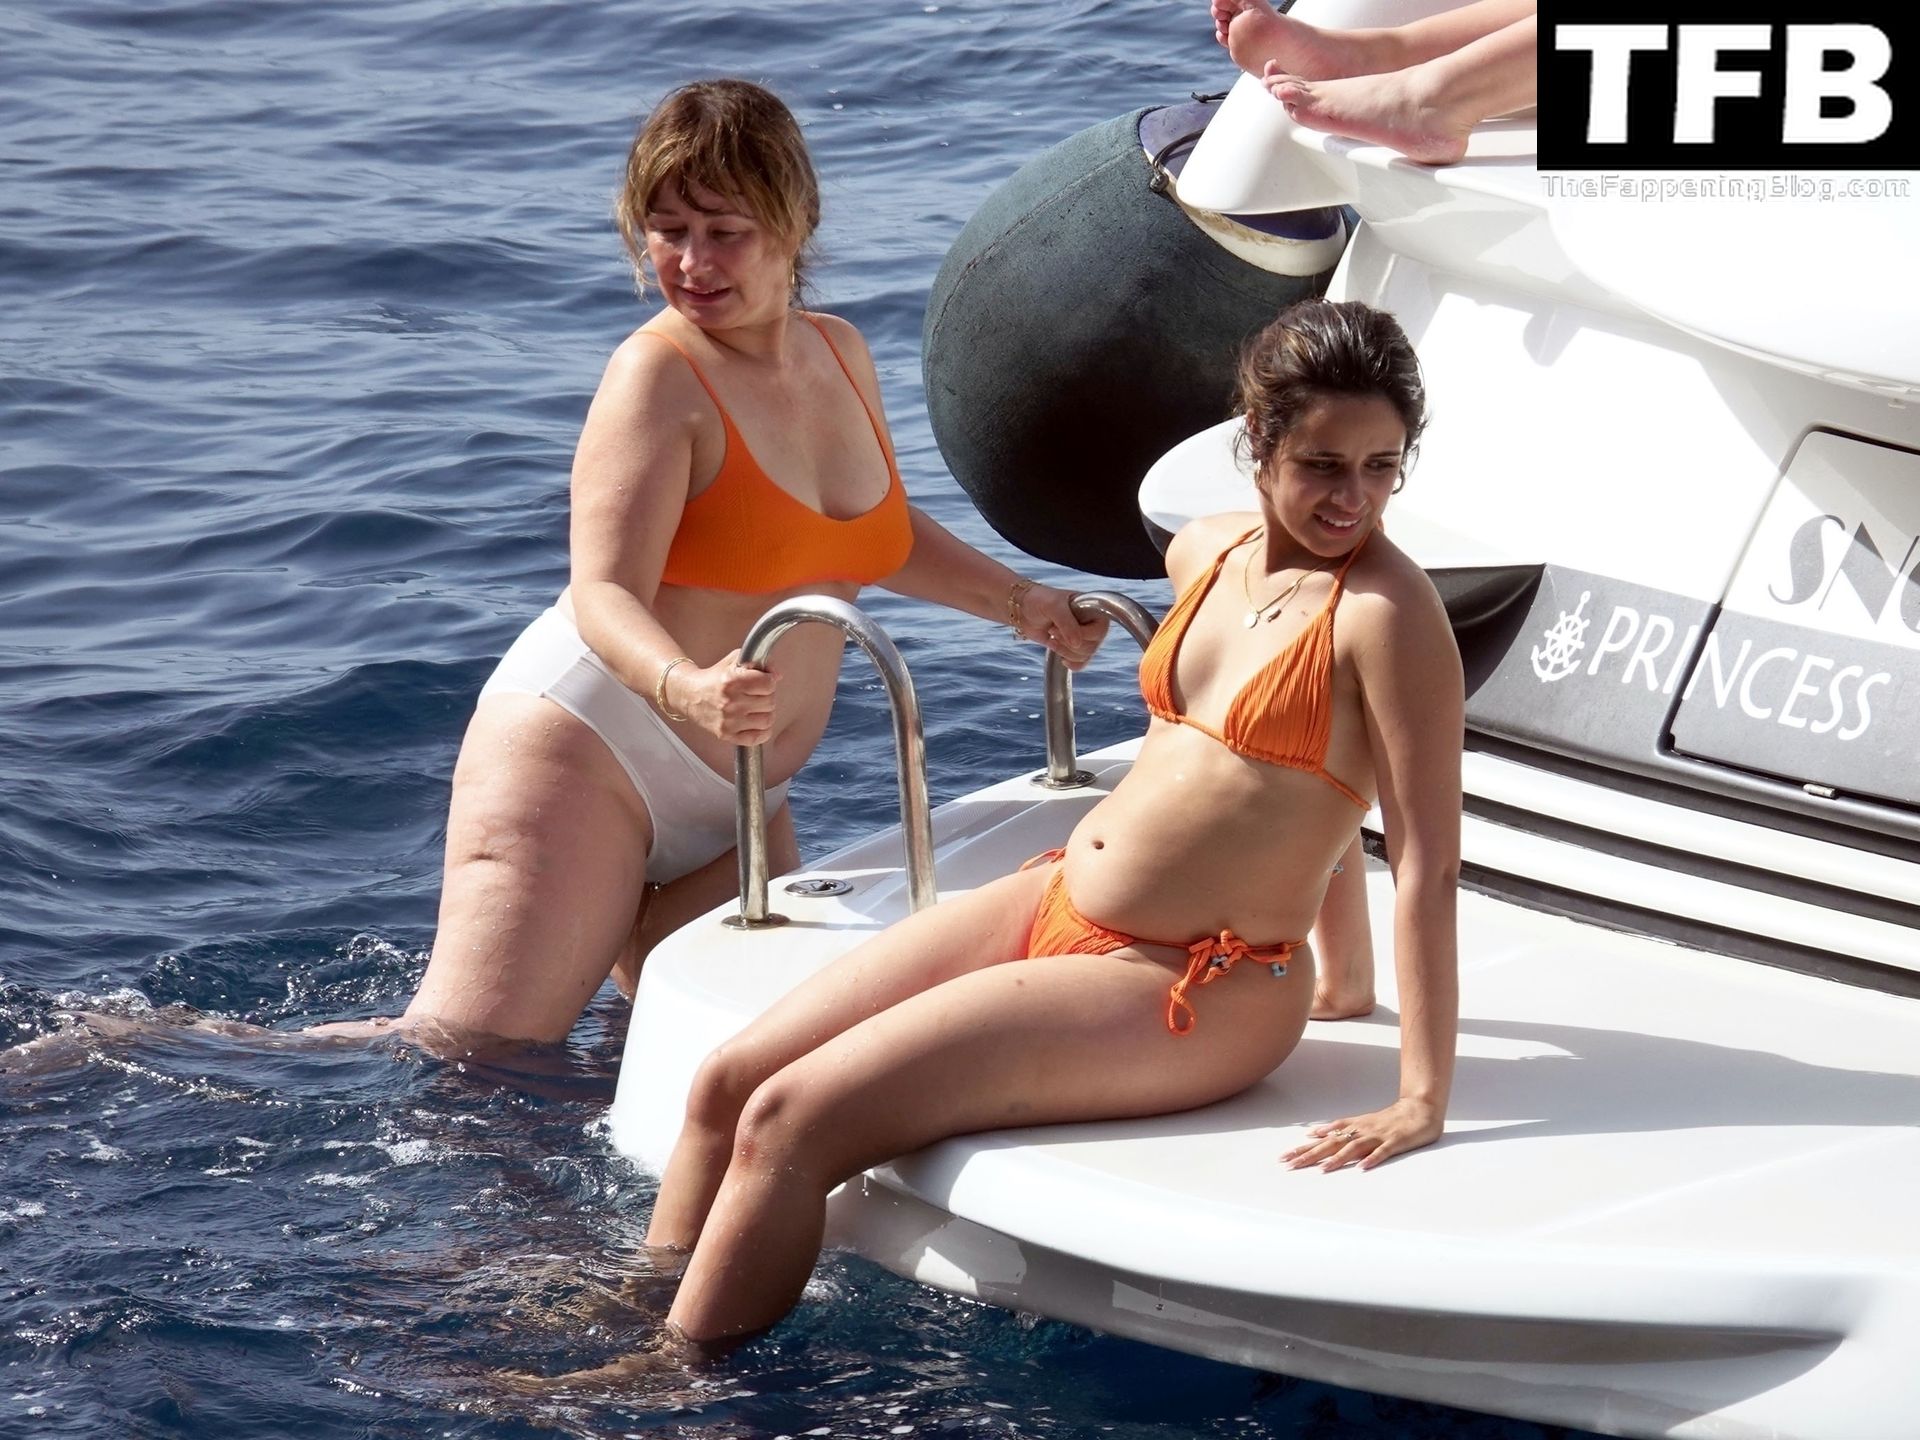 Camila-Cabello-Nude-Sexy-The-Fappening-Blog-45.jpg